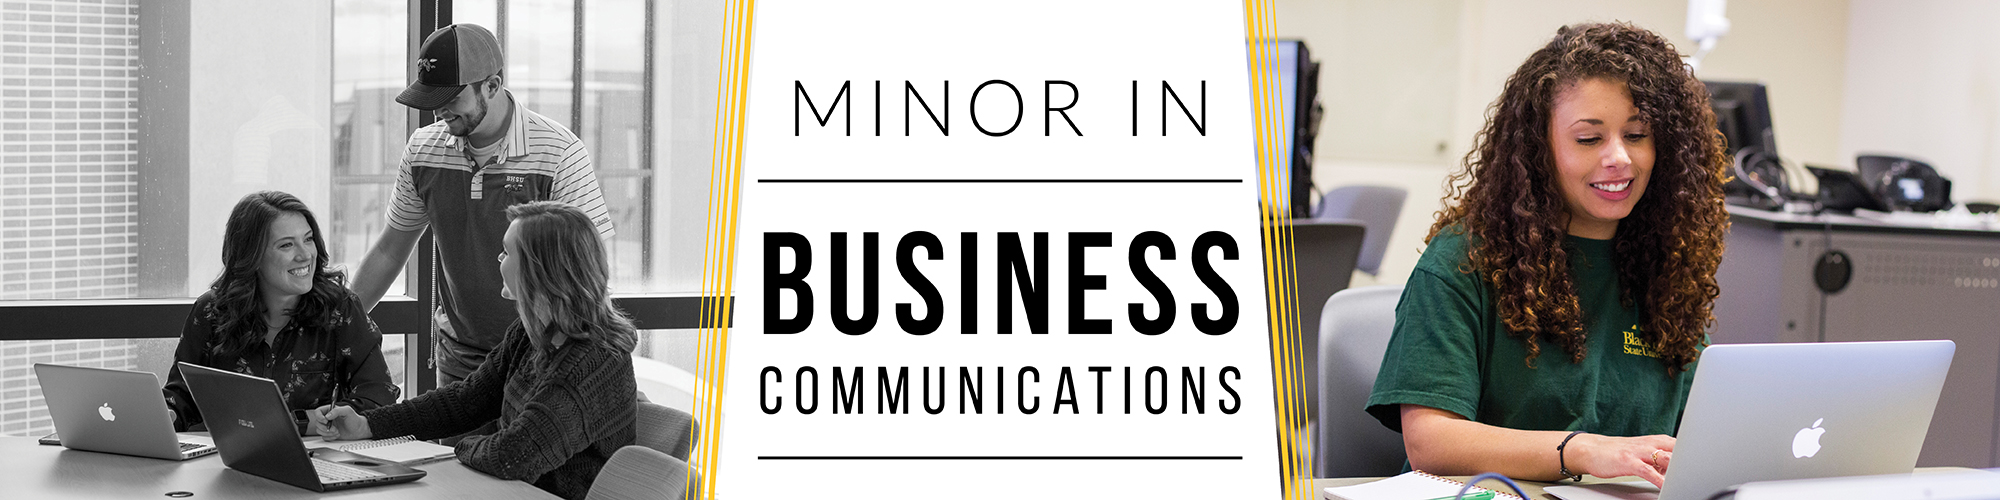 Business Communication Banner